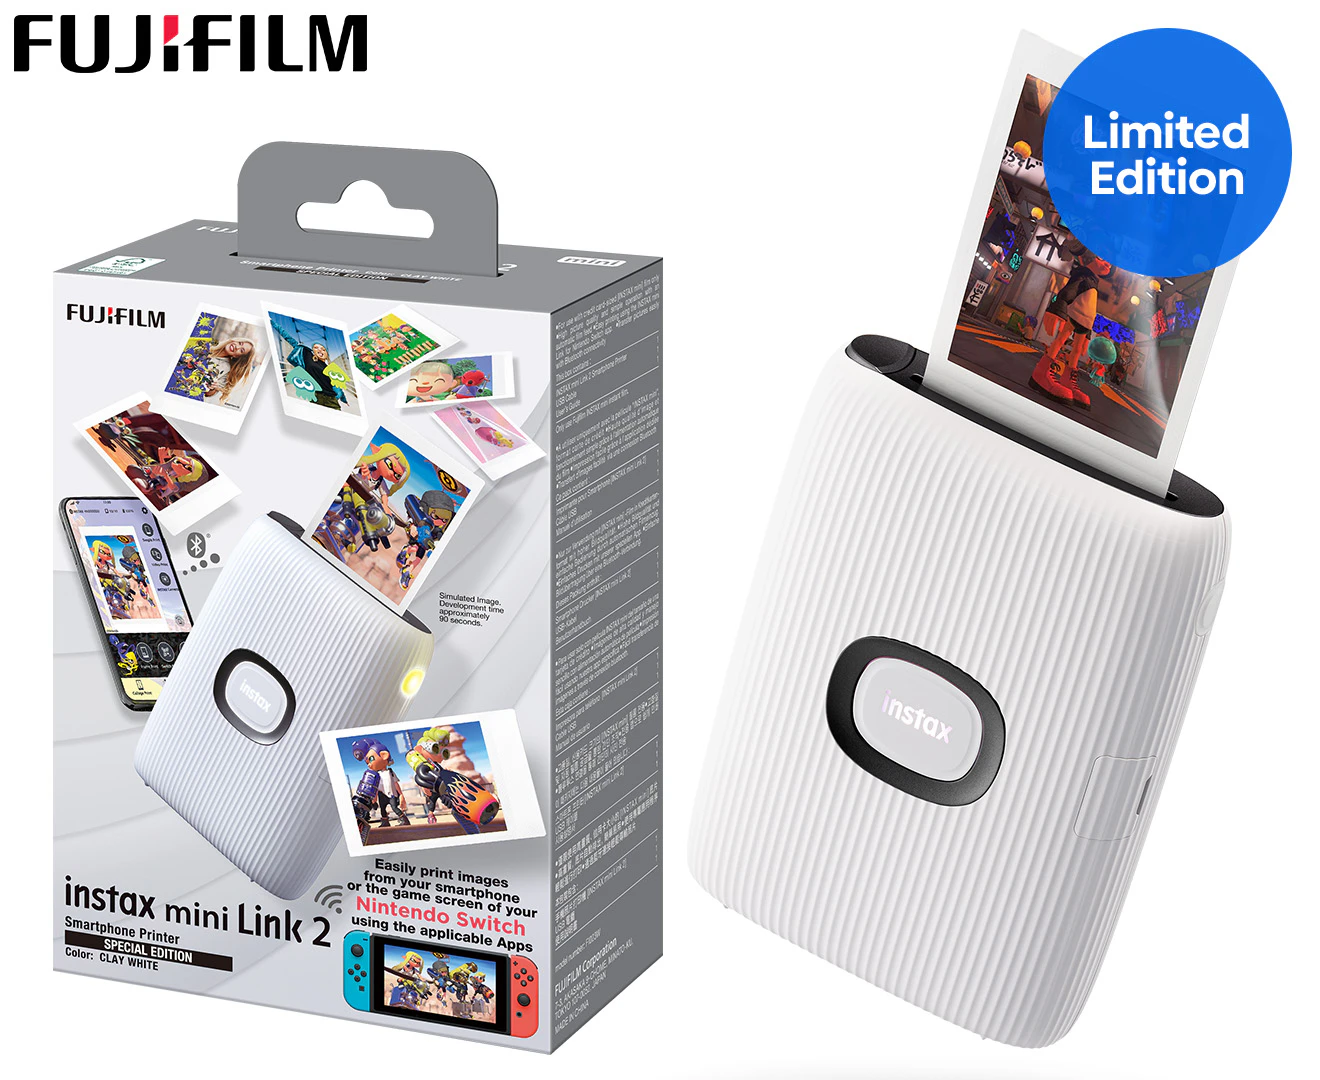 Fujifilm Instax Mini Link 2 Special Edition Smartphone Printer